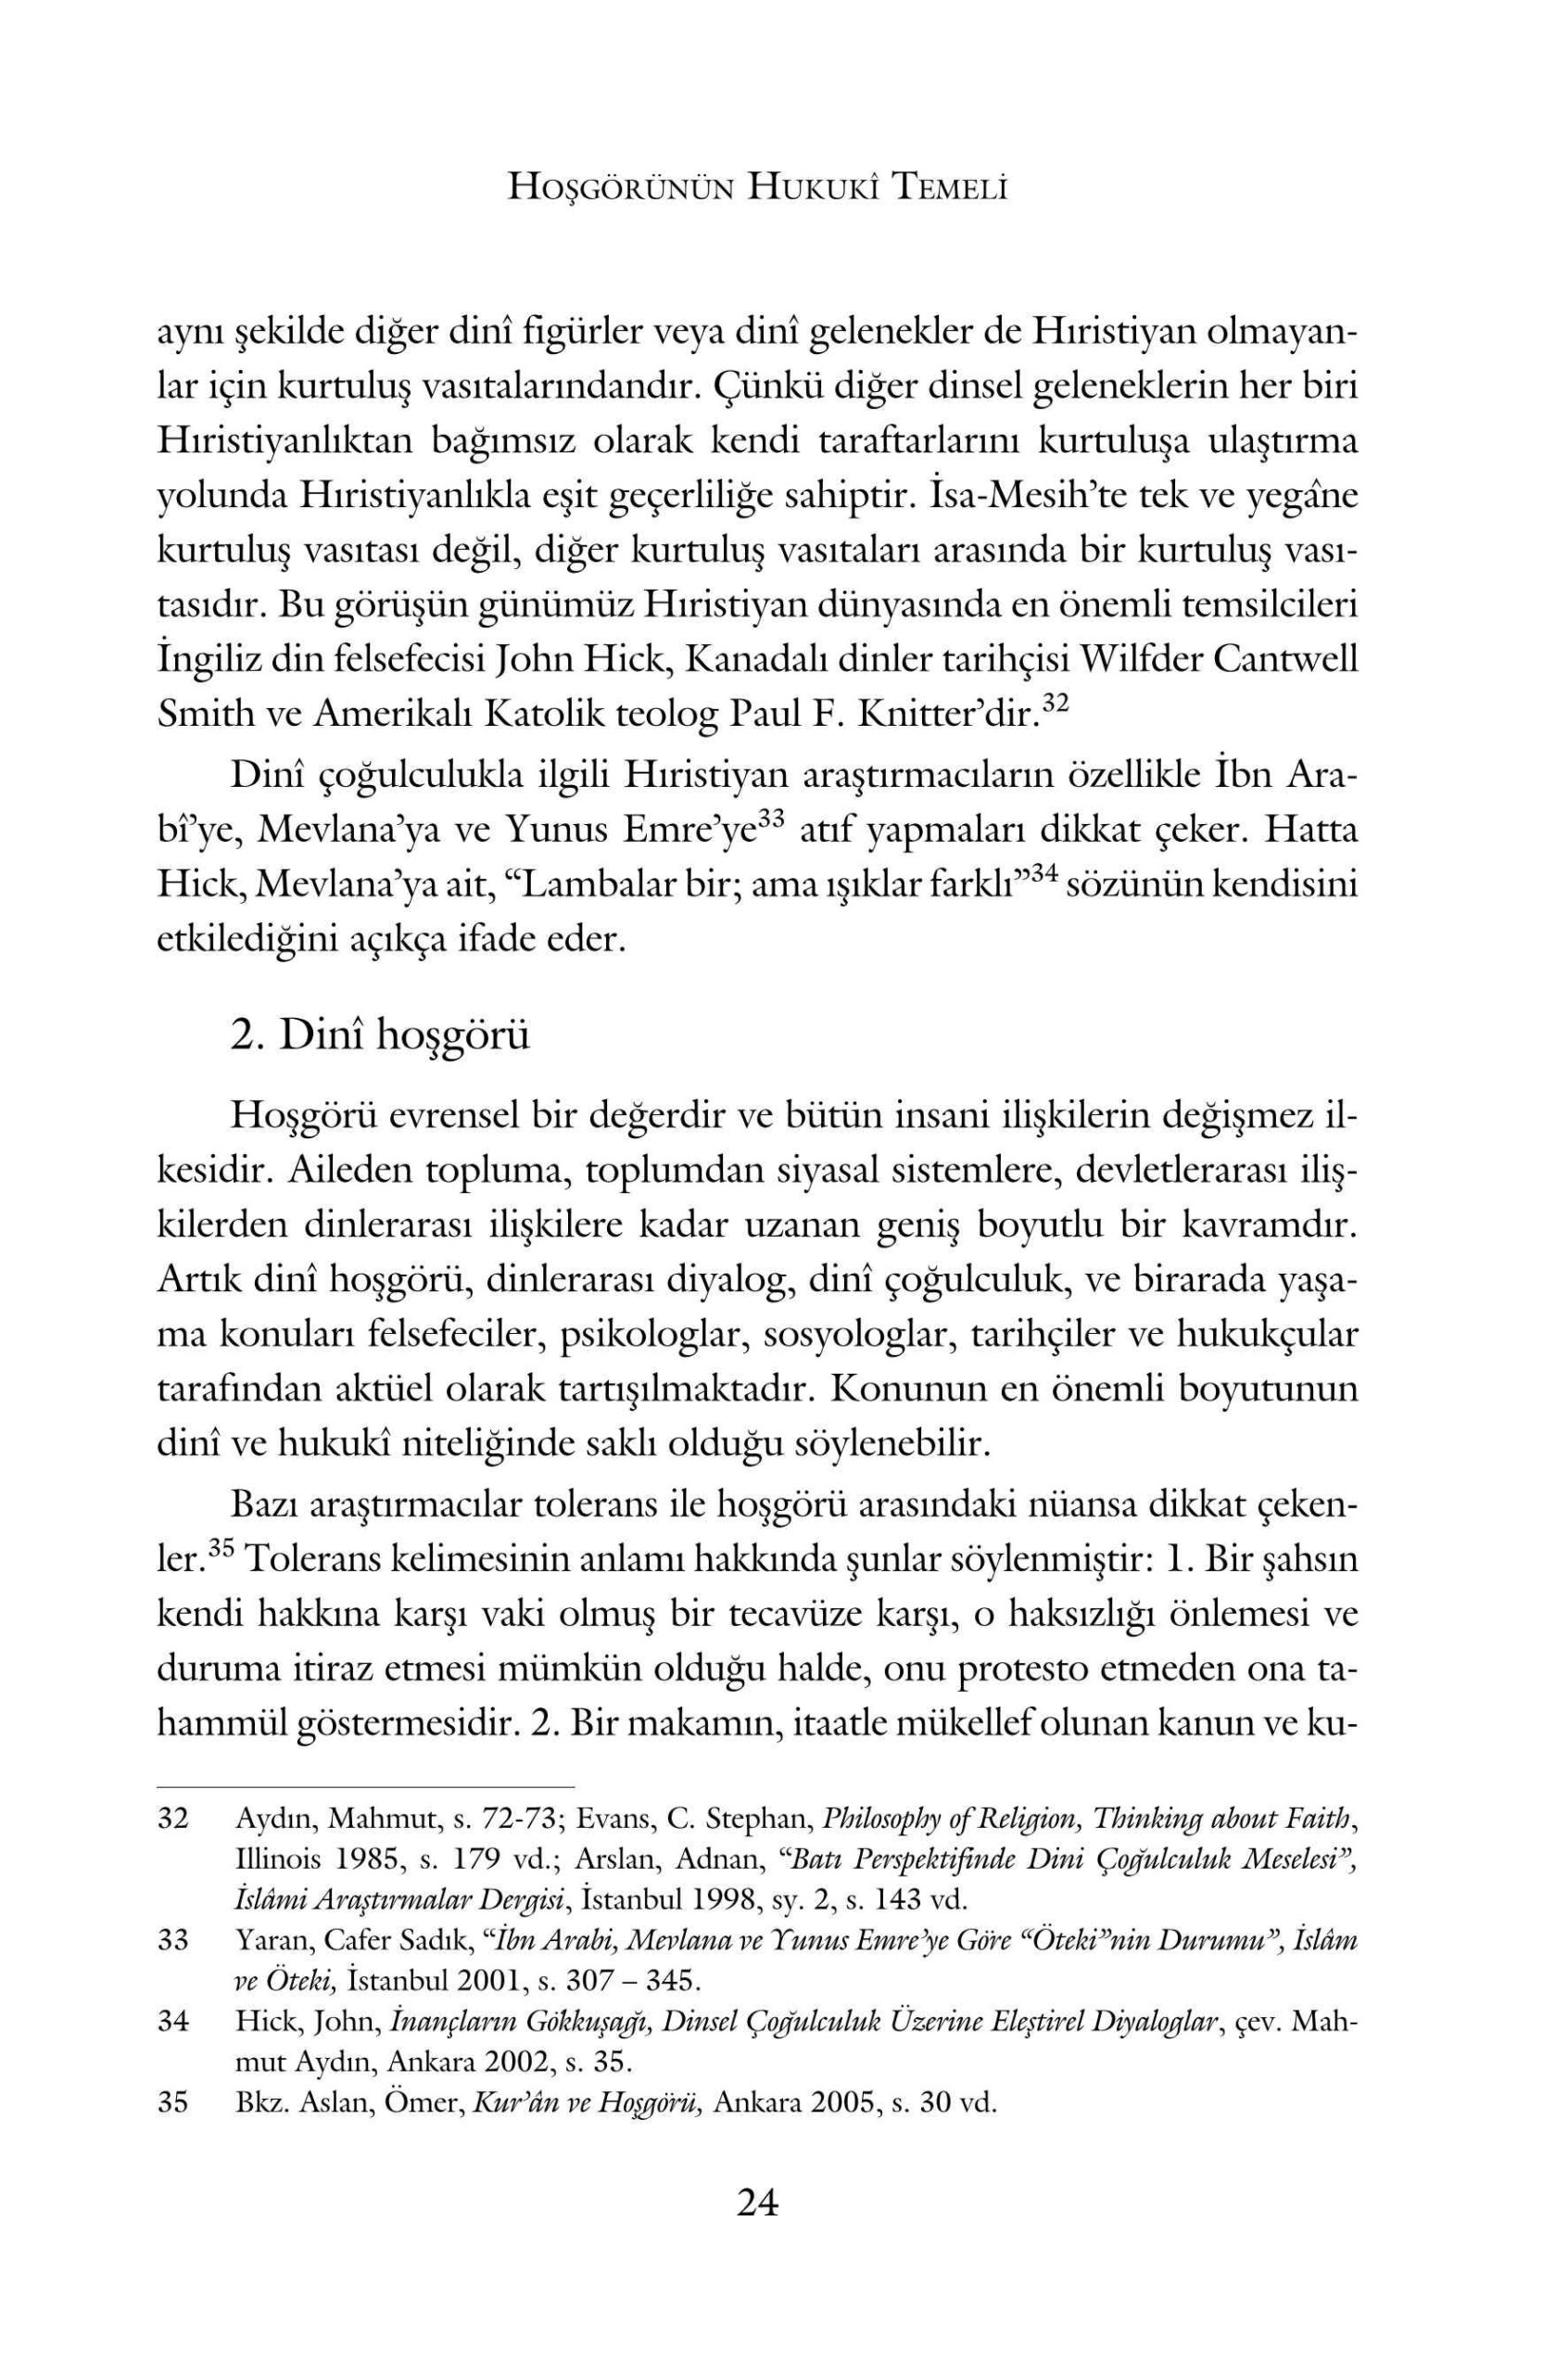 Ahmet Gunes - Hosgorunun Hukuki Temeli - IsikAkademiY.pdf, 225-Sayfa 